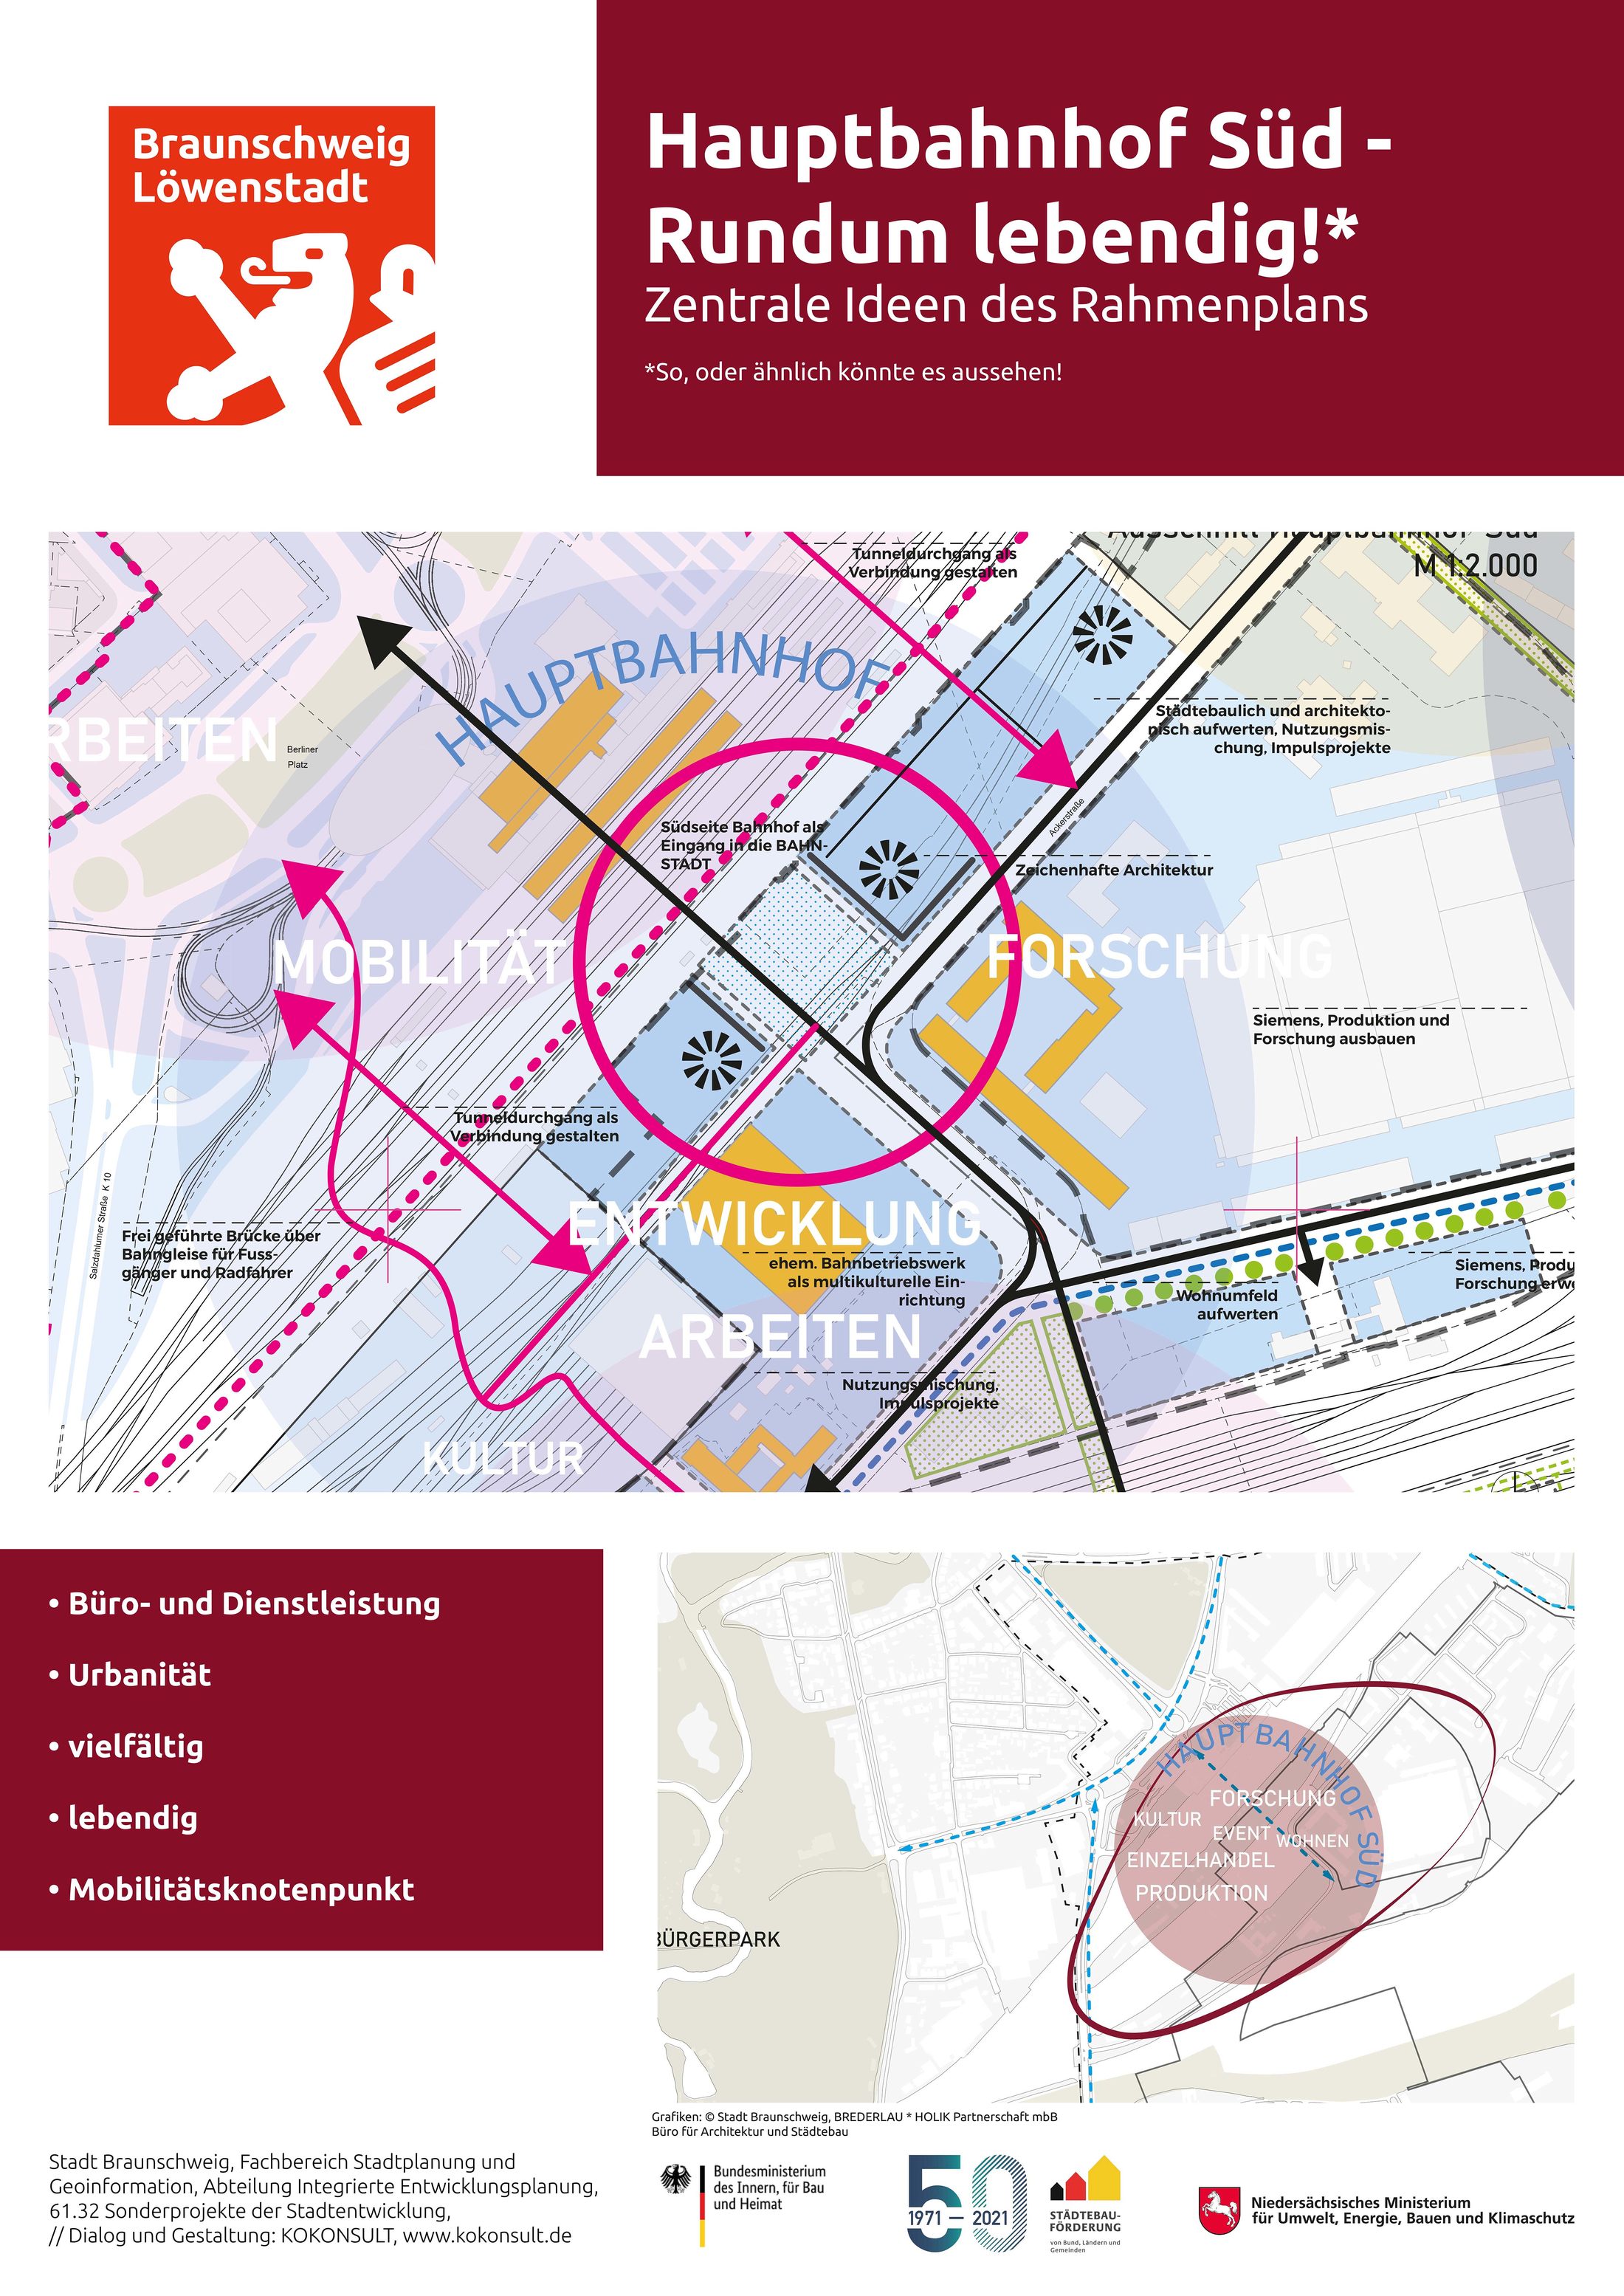 Plakat "Hauptbahnhof Süd - Rundum lebendig! - Zentrale Ideen des Rahmenplans" (Wird bei Klick vergrößert)